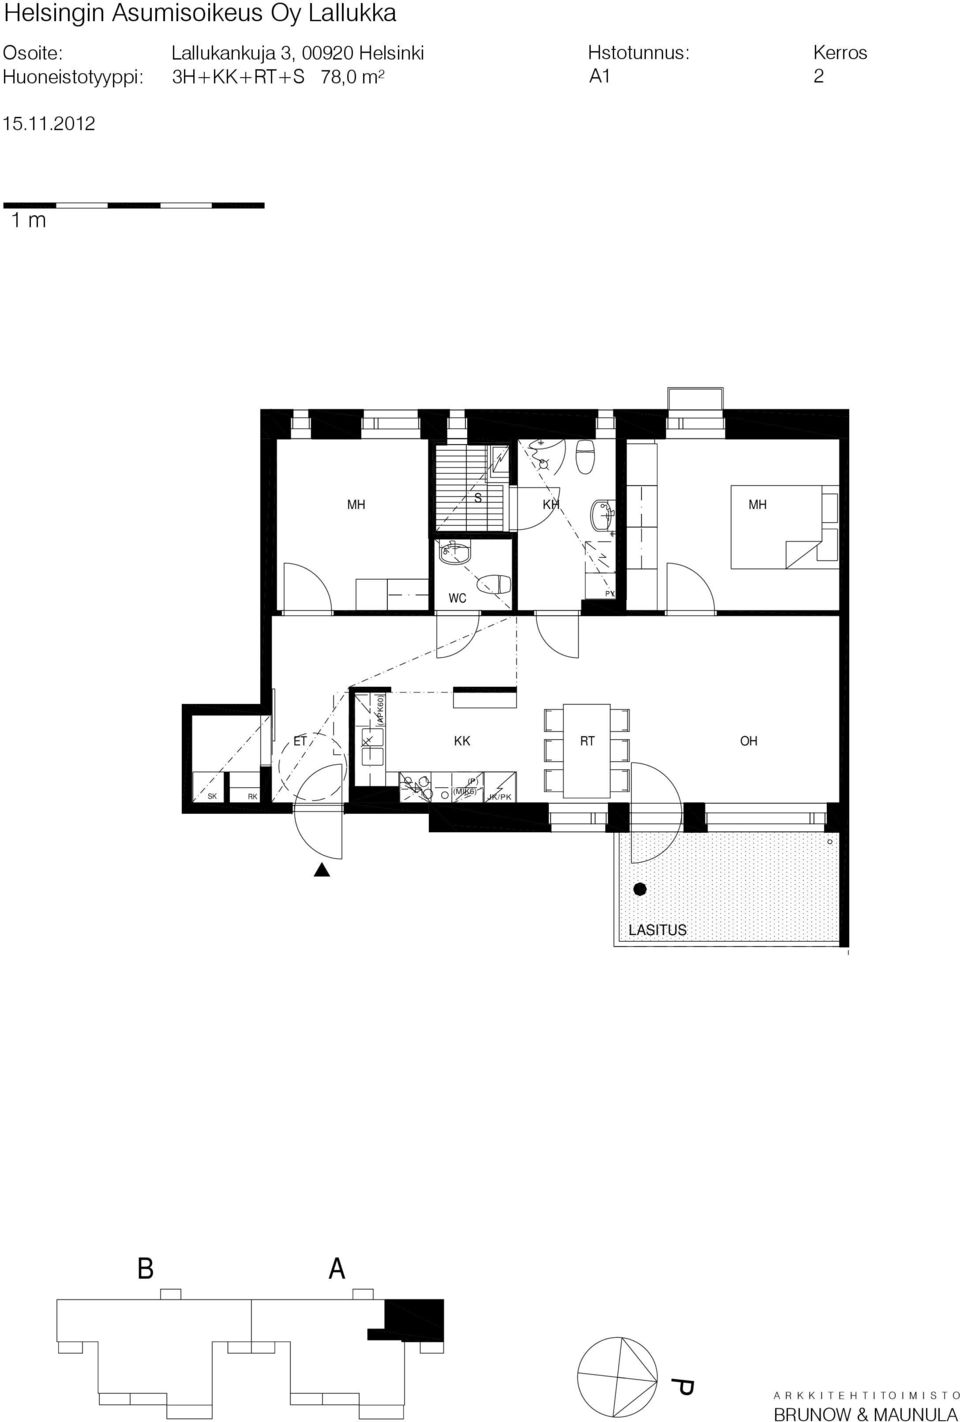 Huoneistotyyppi: 3H+++ 78,0 m² 1 2